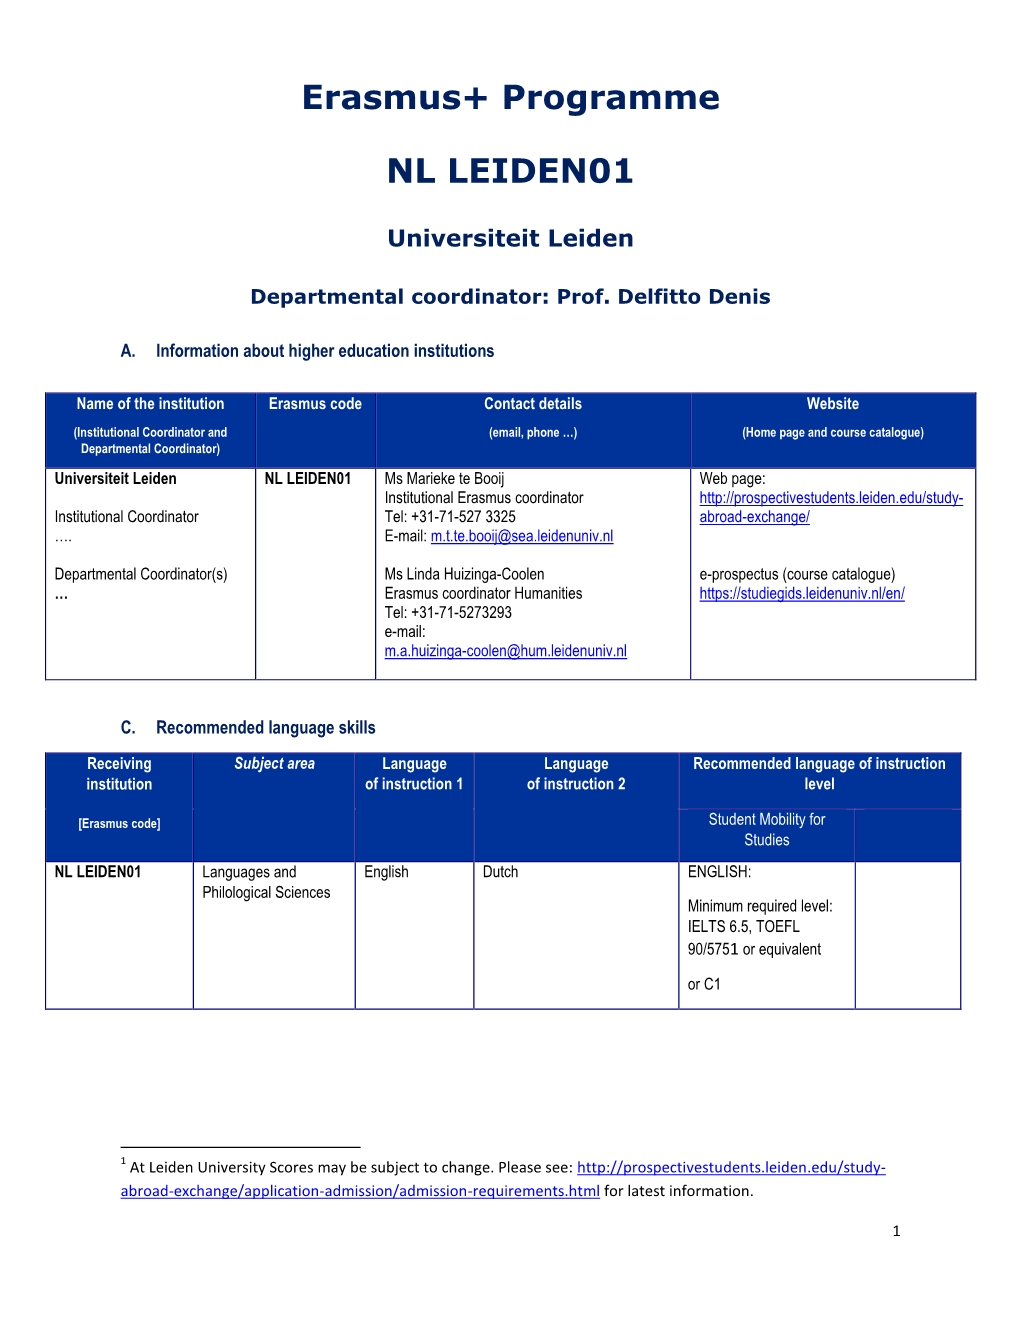 Erasmus+ Programme NL LEIDEN01